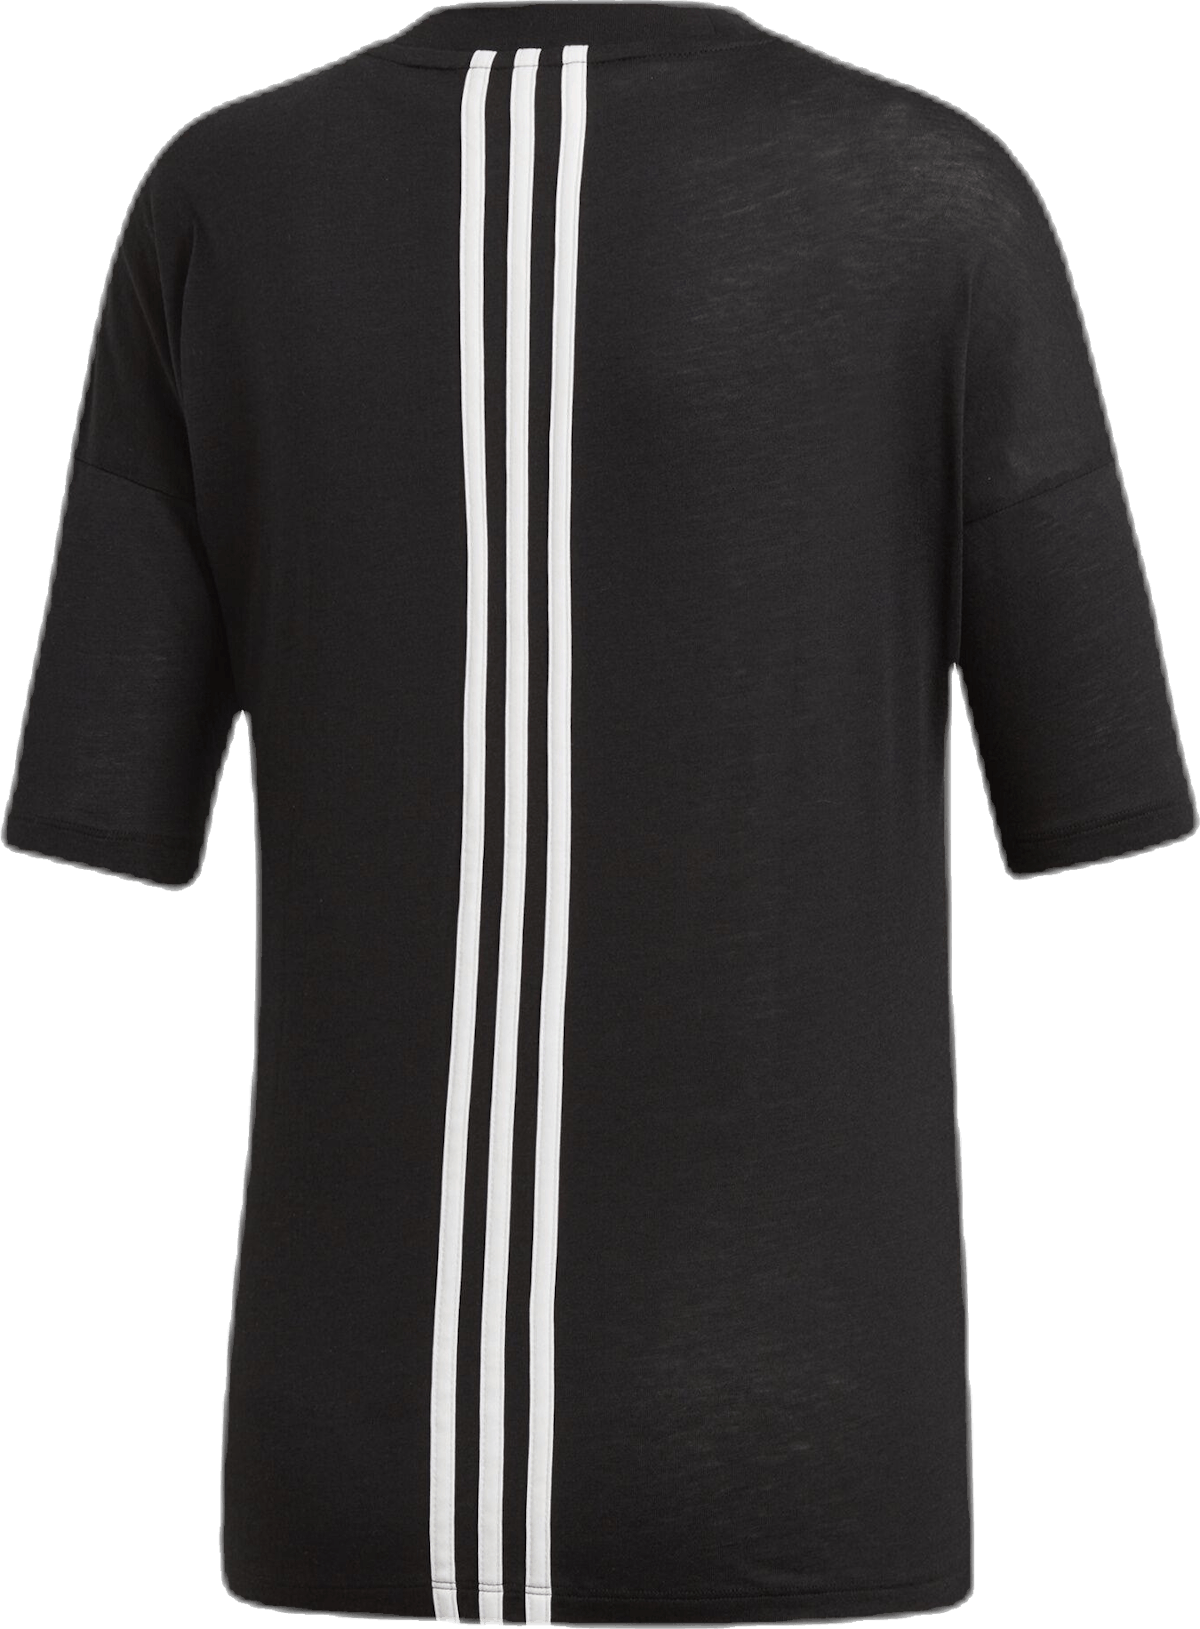 Must Haves 3-Stripes T-Shirt Black